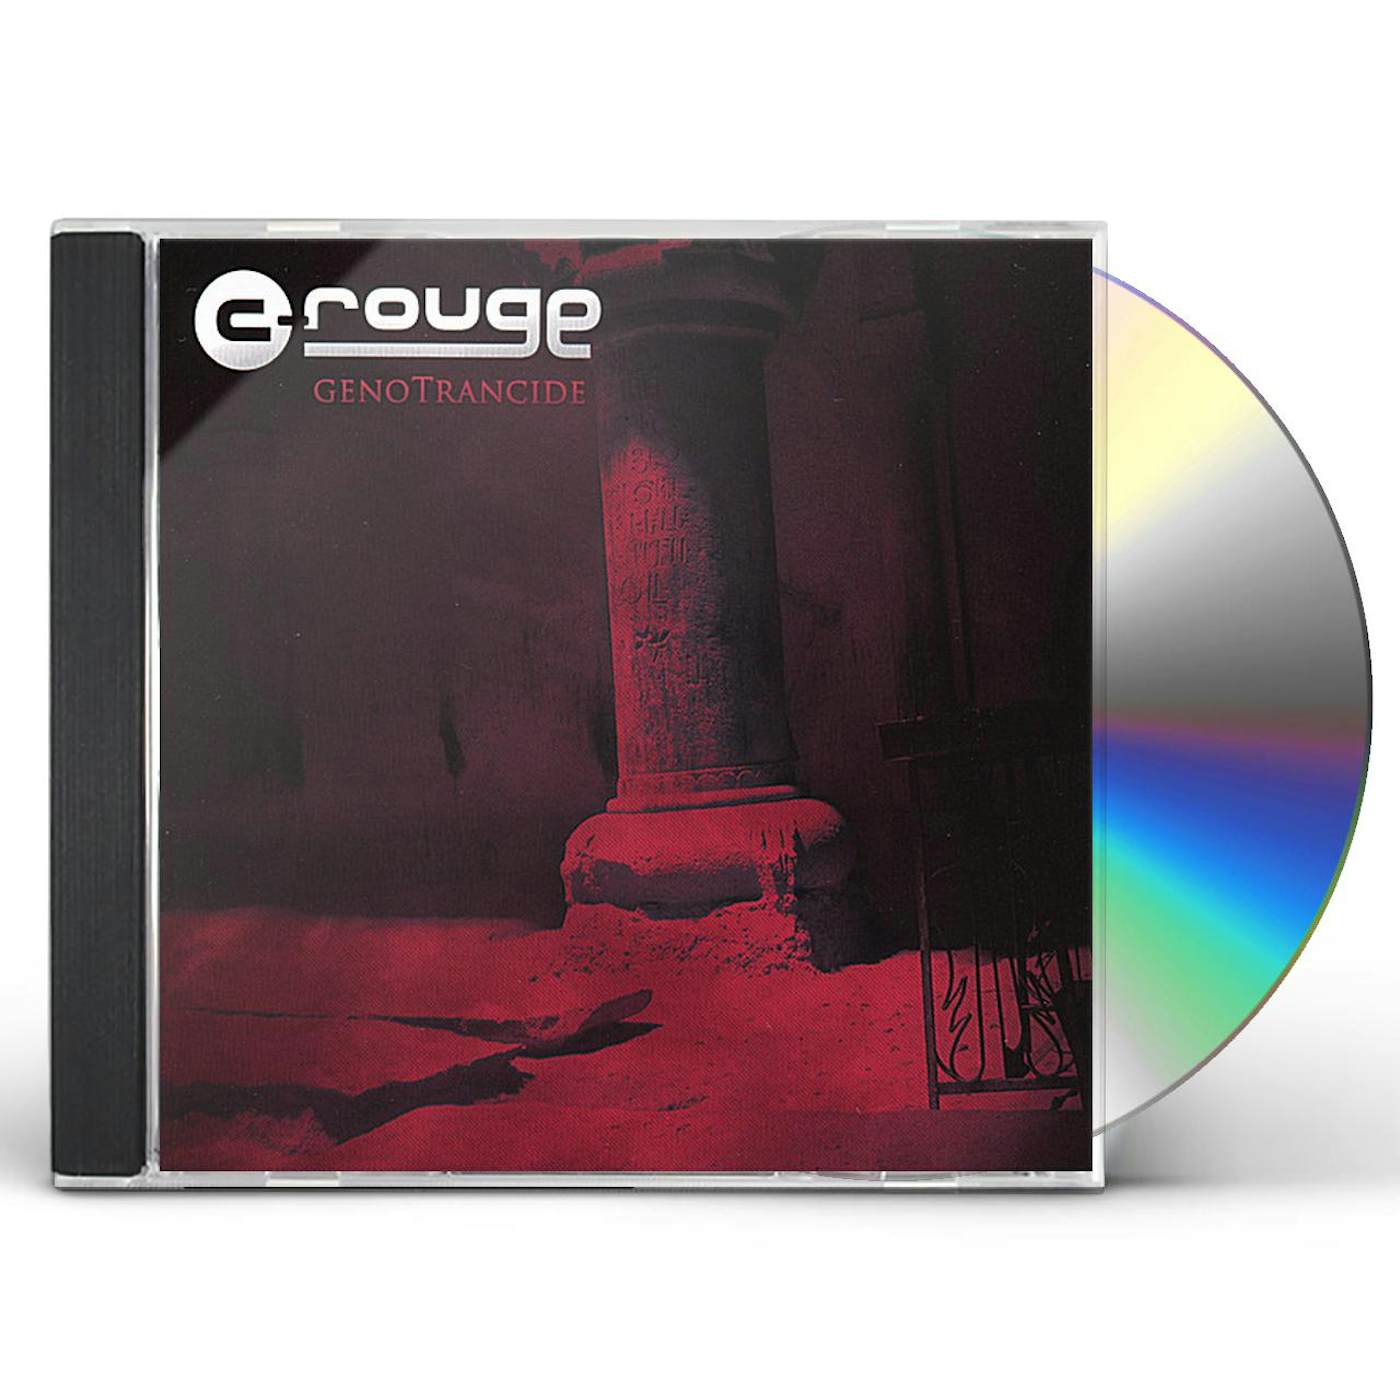 C-ROUGE GENOTRANCIDE CD